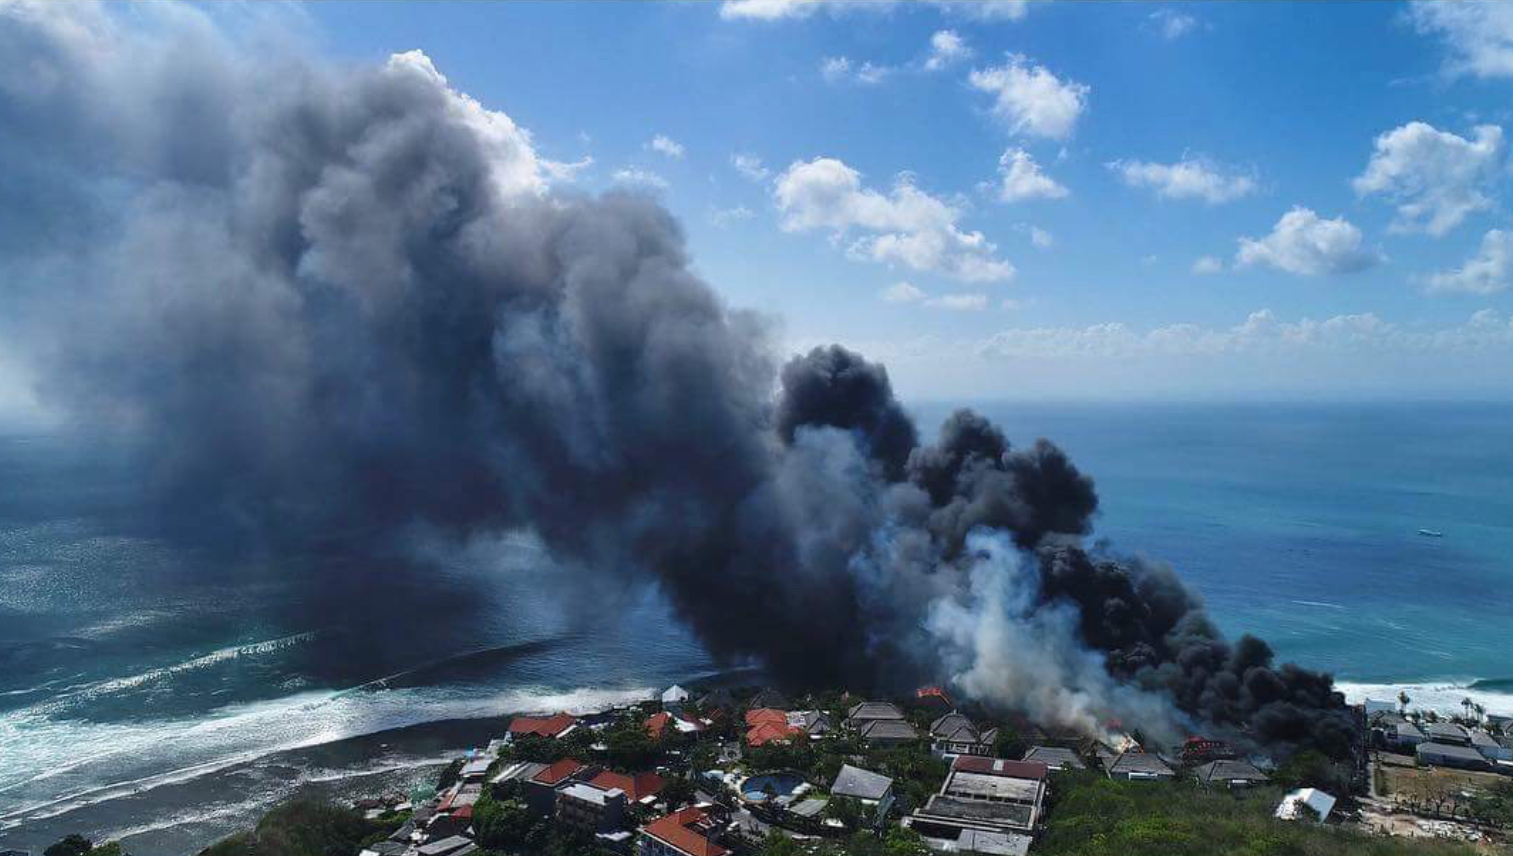 Smoke billows out from a fire in Uluwatu on July 23, 2018. Photo: Nick Steben/@terrible1stebs